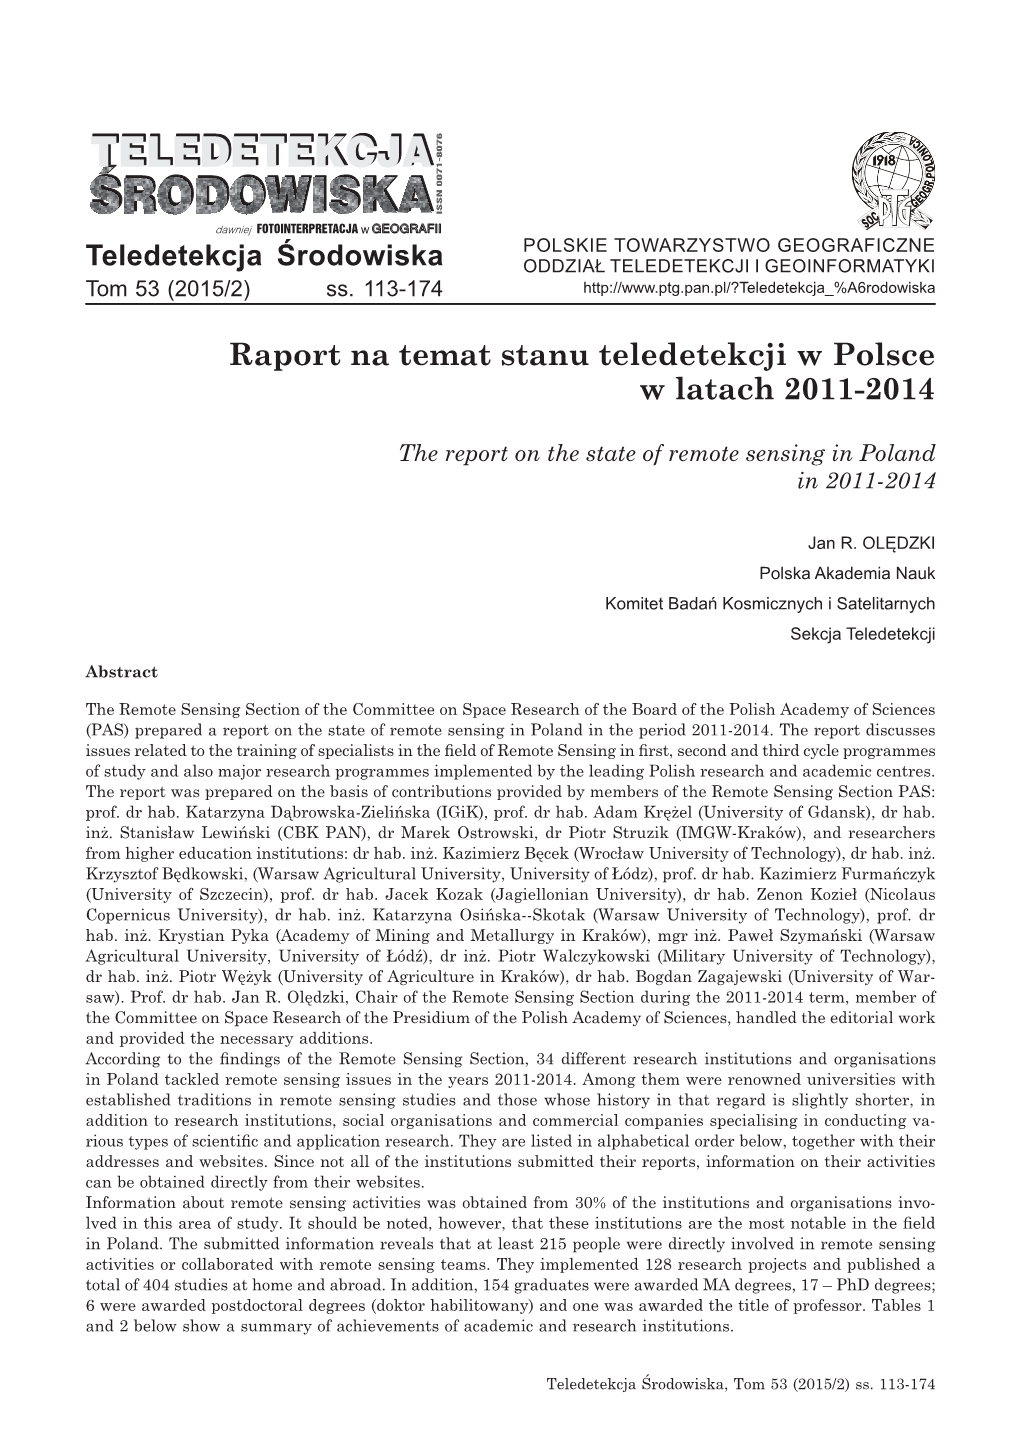 Raport Na Temat Stanu Teledetekcji W Polsce W Latach 2011-2014